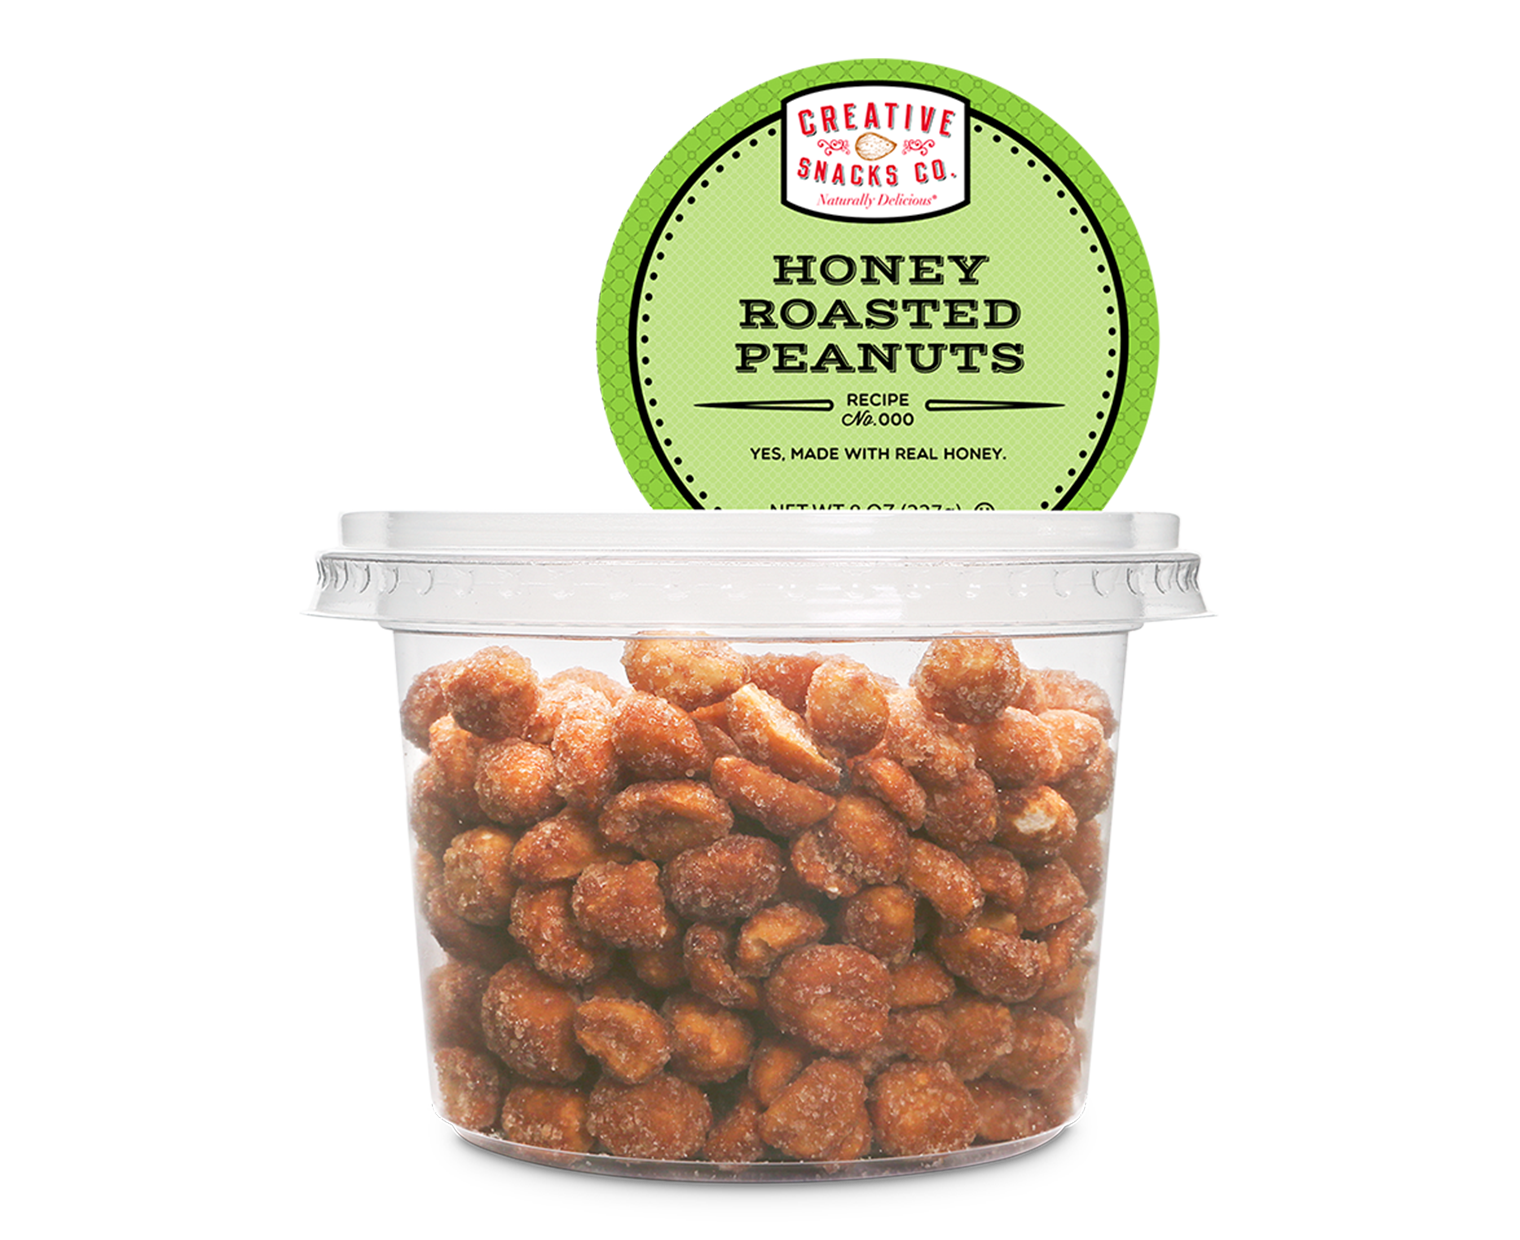 Honey Roasted Peanuts, Creative Snacks